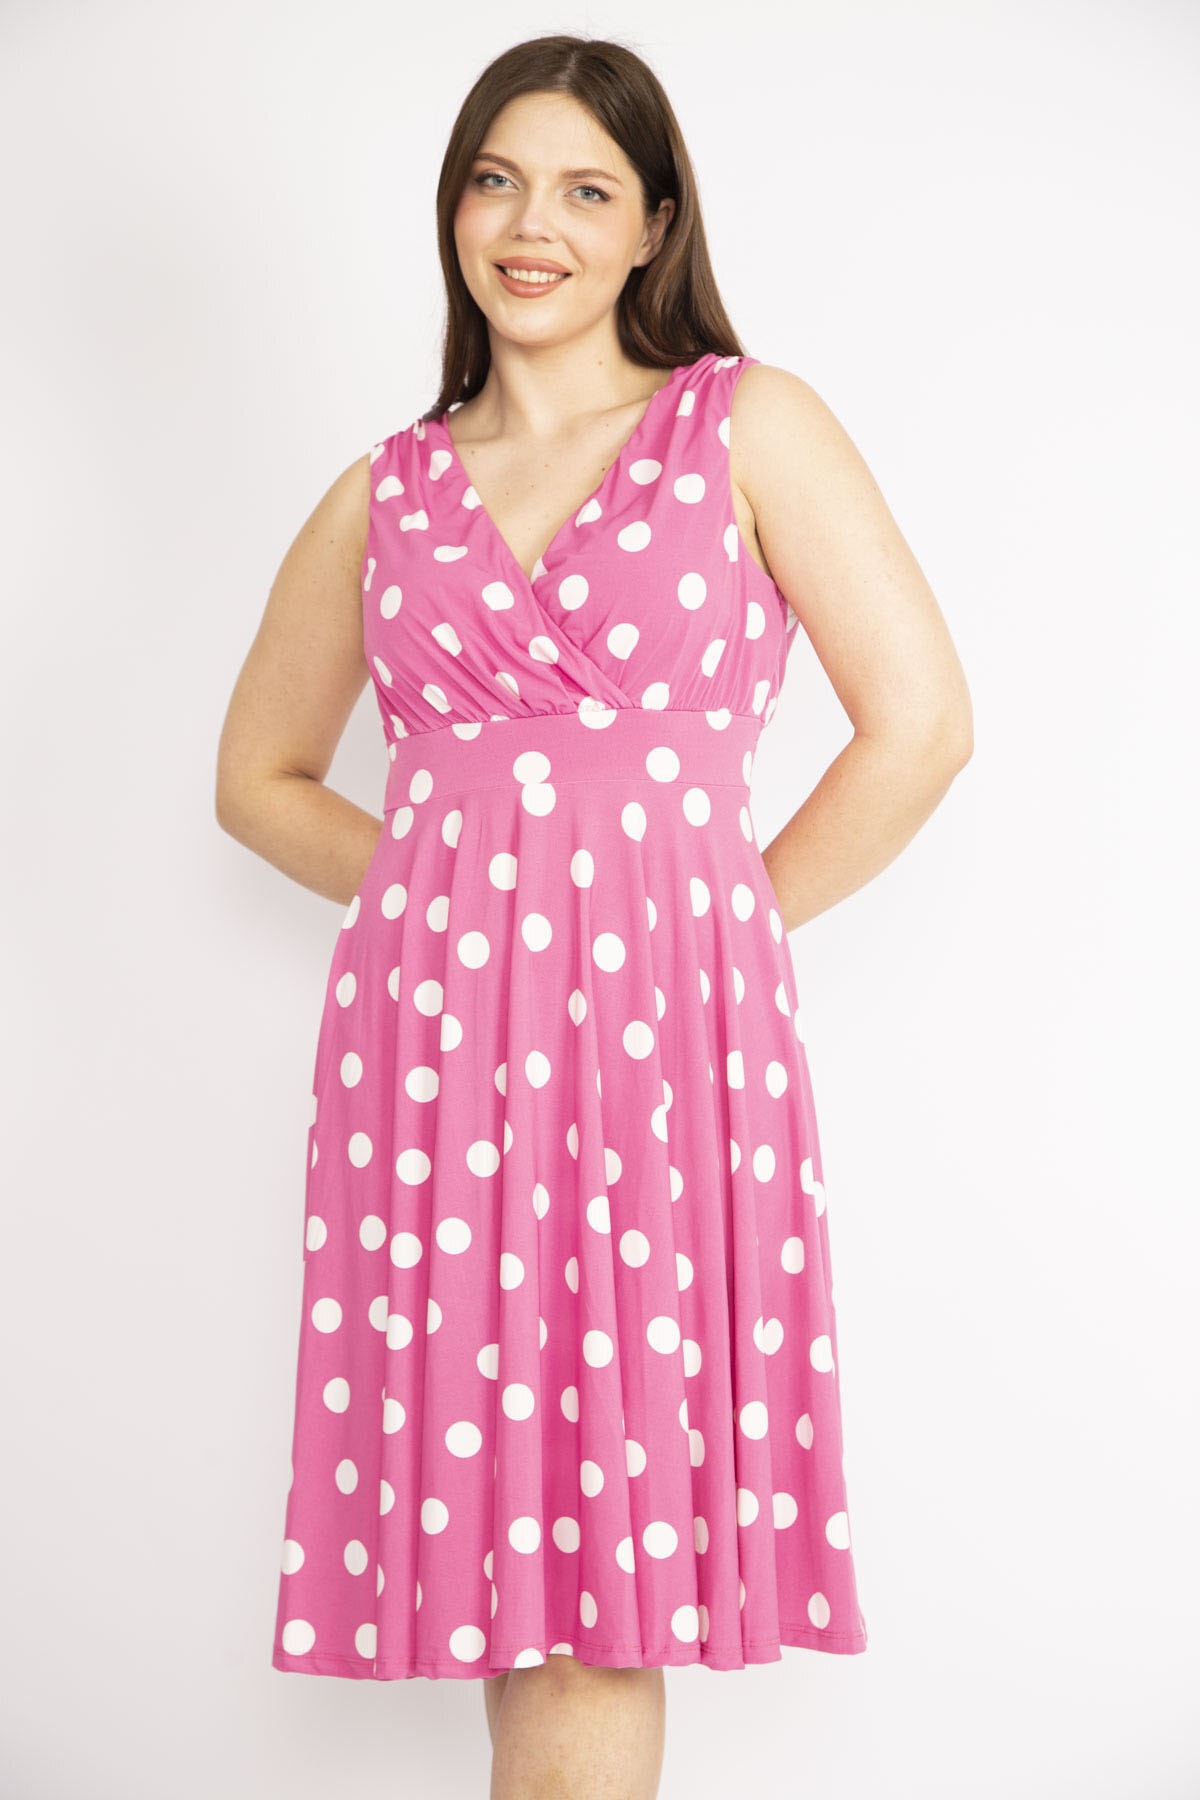 Şans Women's Pink Plus Size Collar Pointed Patterned Dress